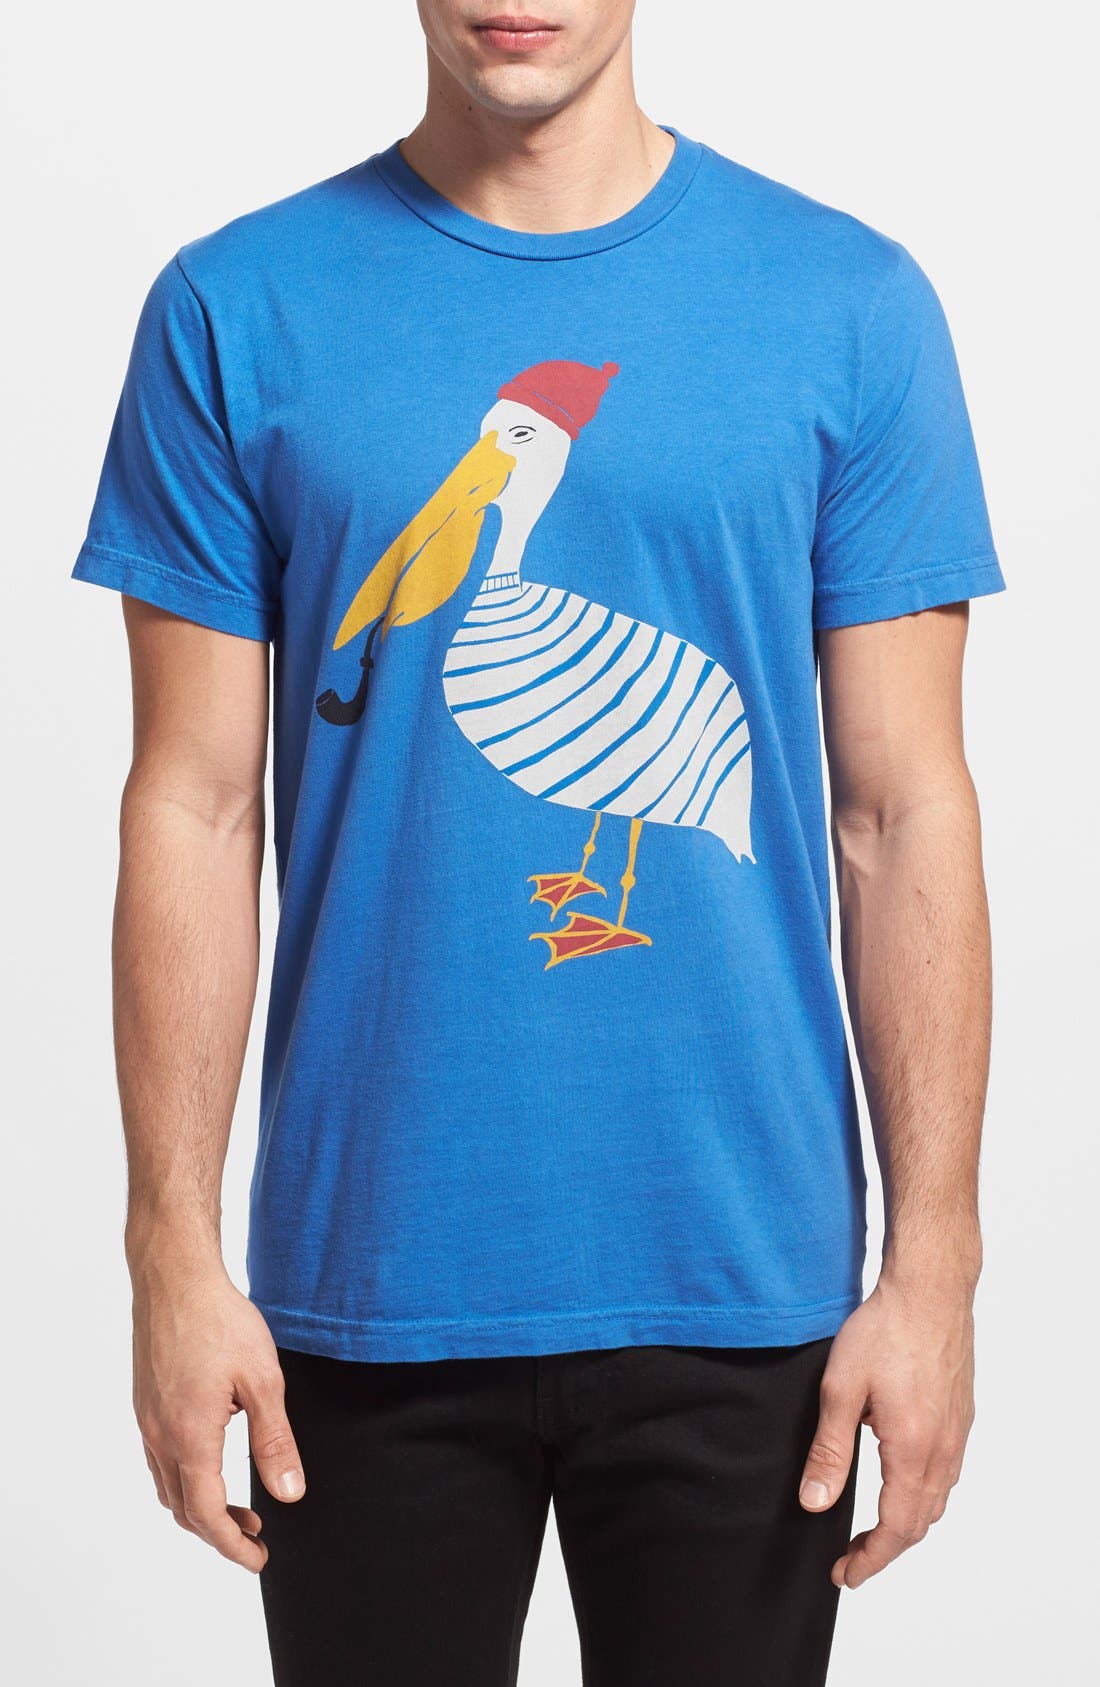 pelican t shirt